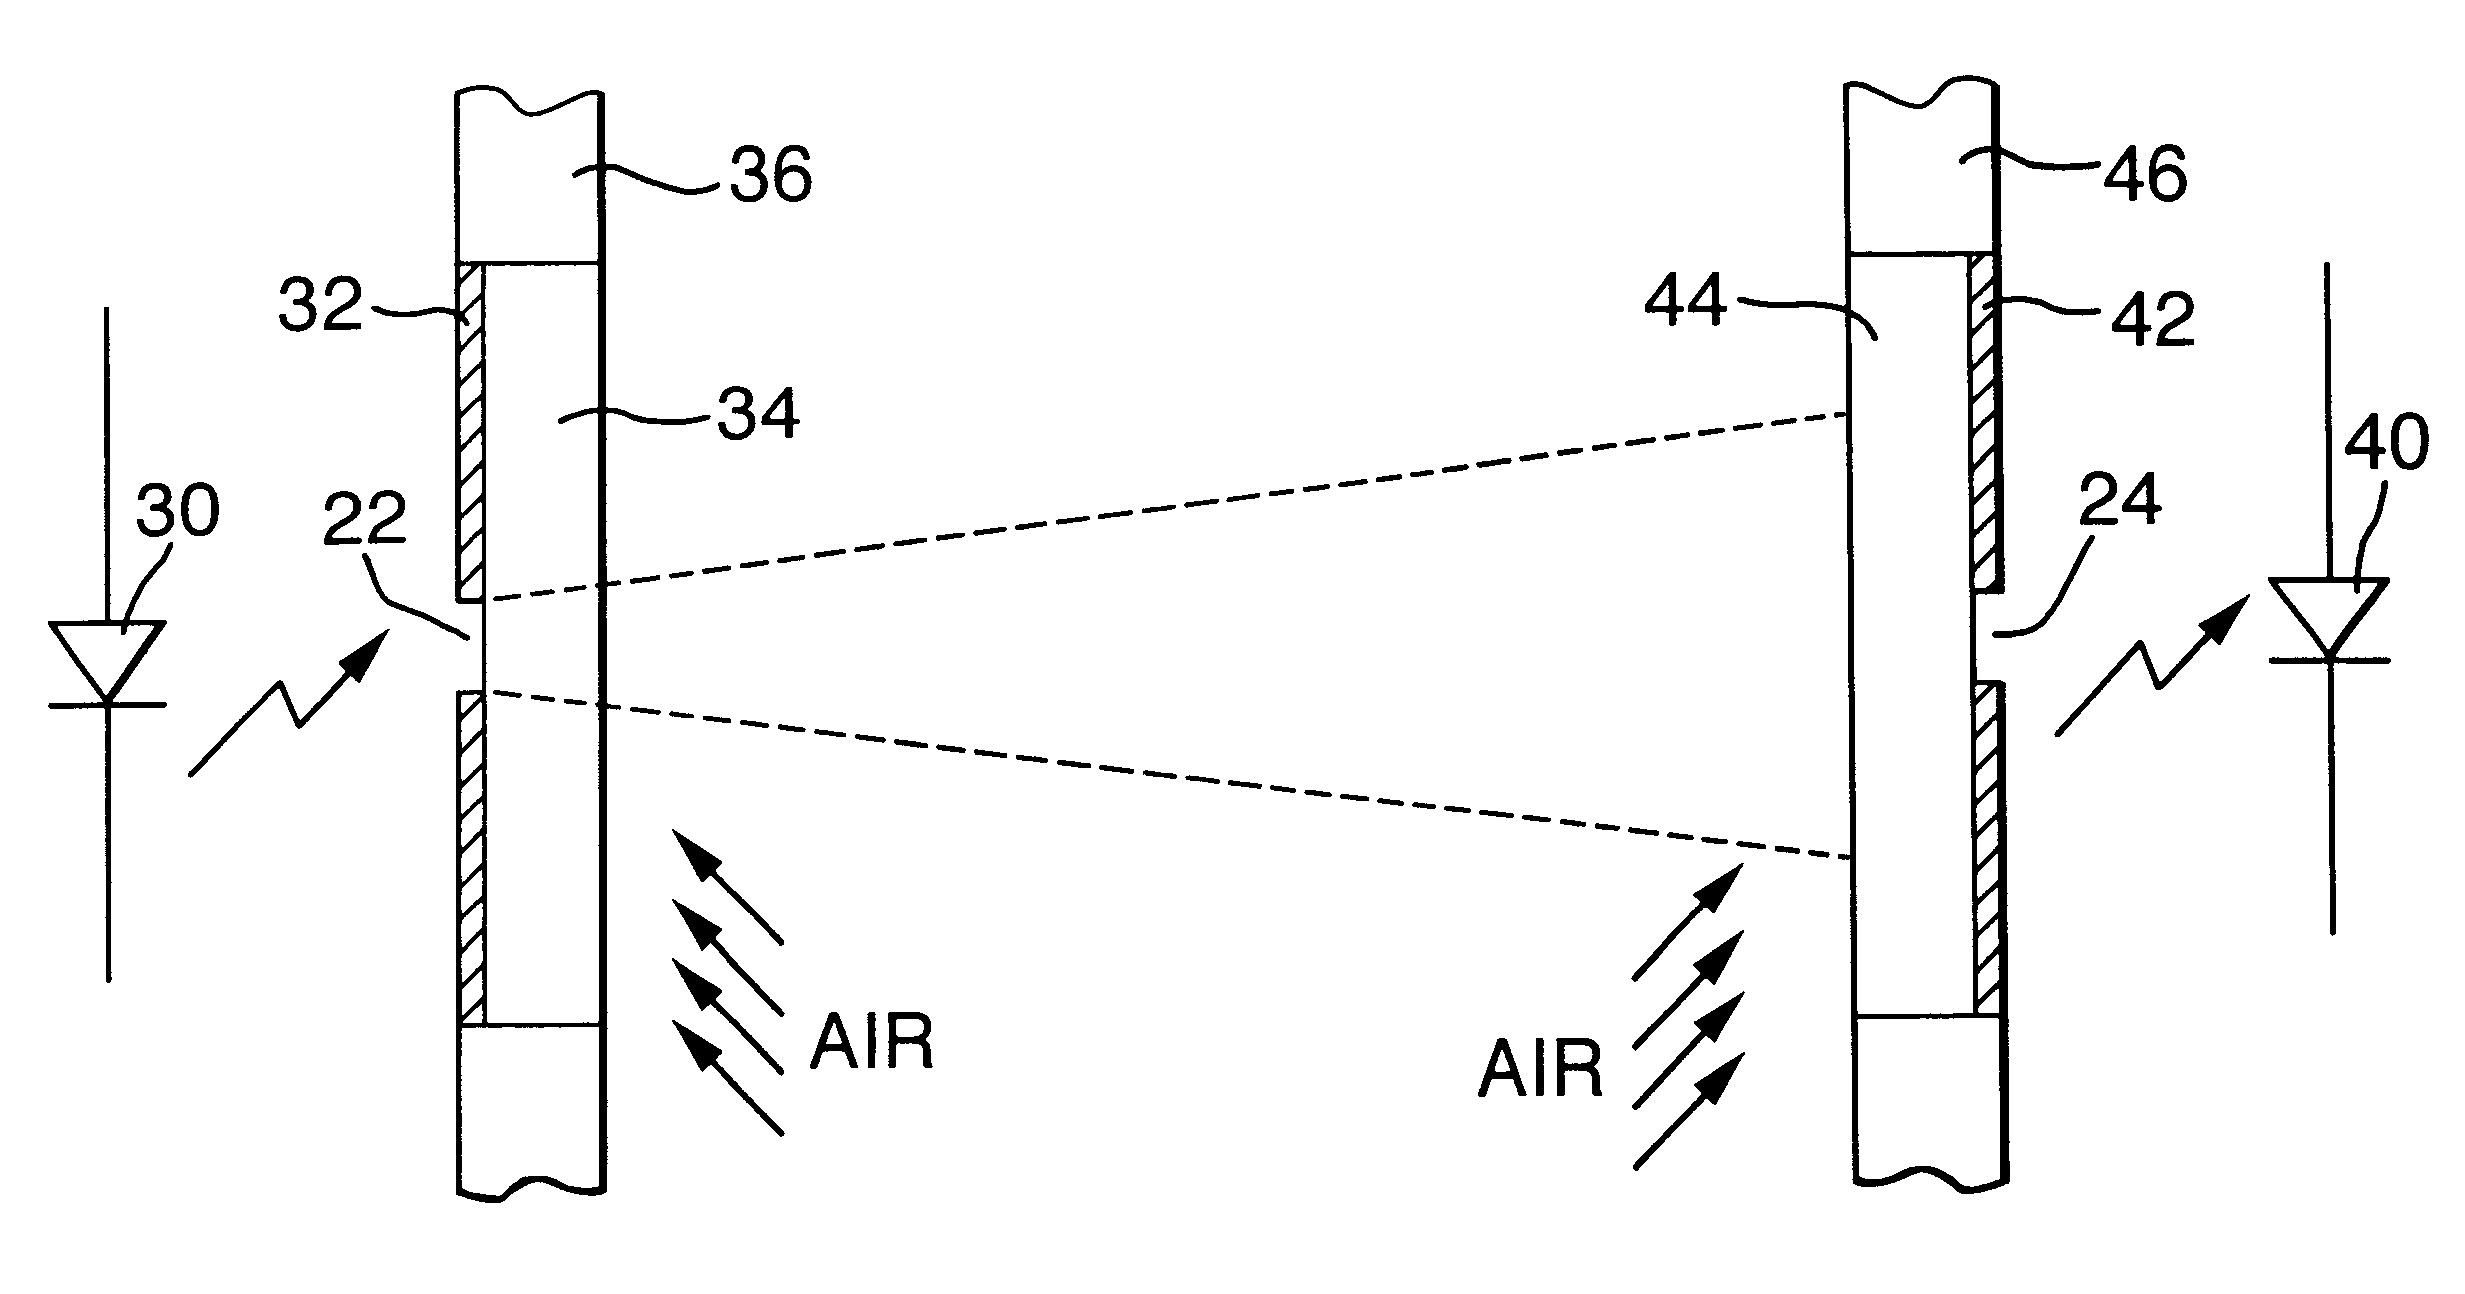 Position determining apparatus for coordinate positioning machine